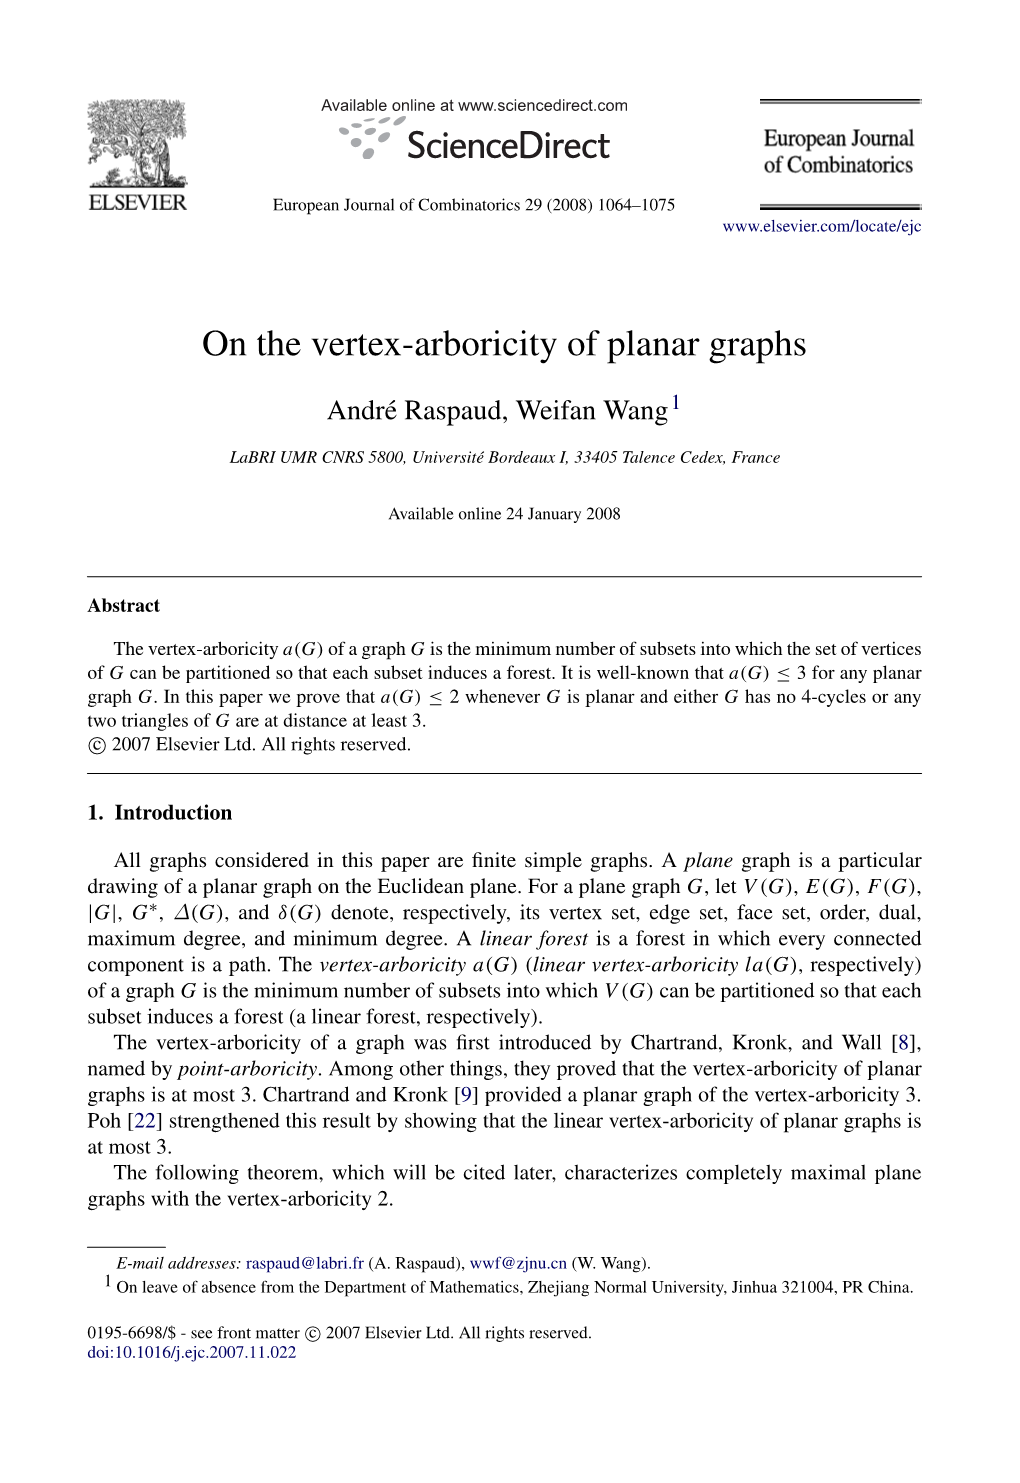 On the Vertex-Arboricity of Planar Graphs